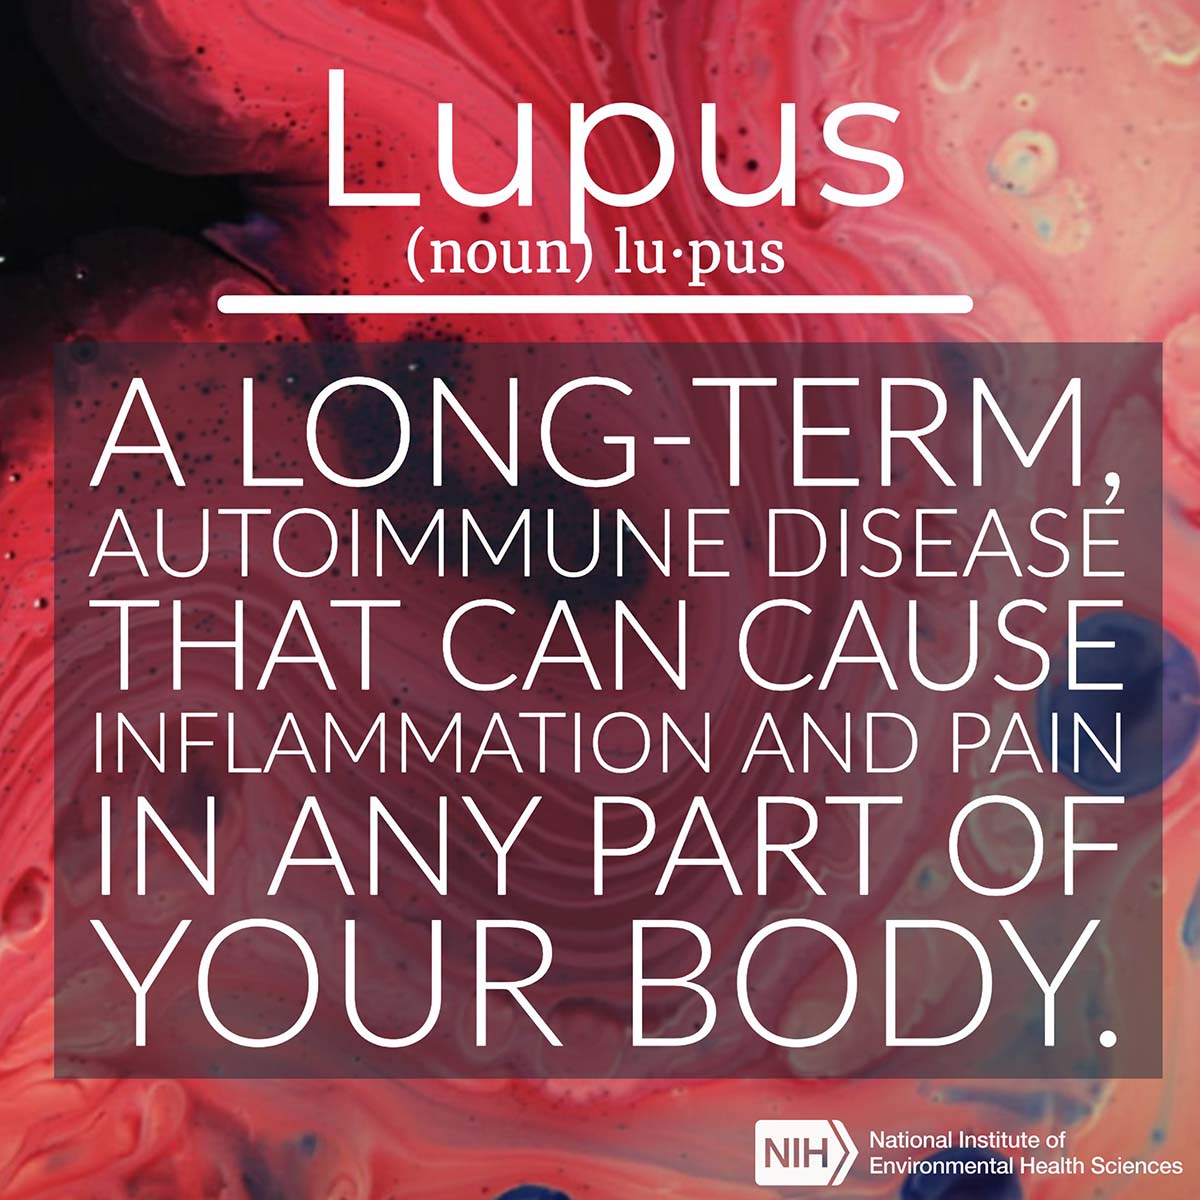 Lupus definition